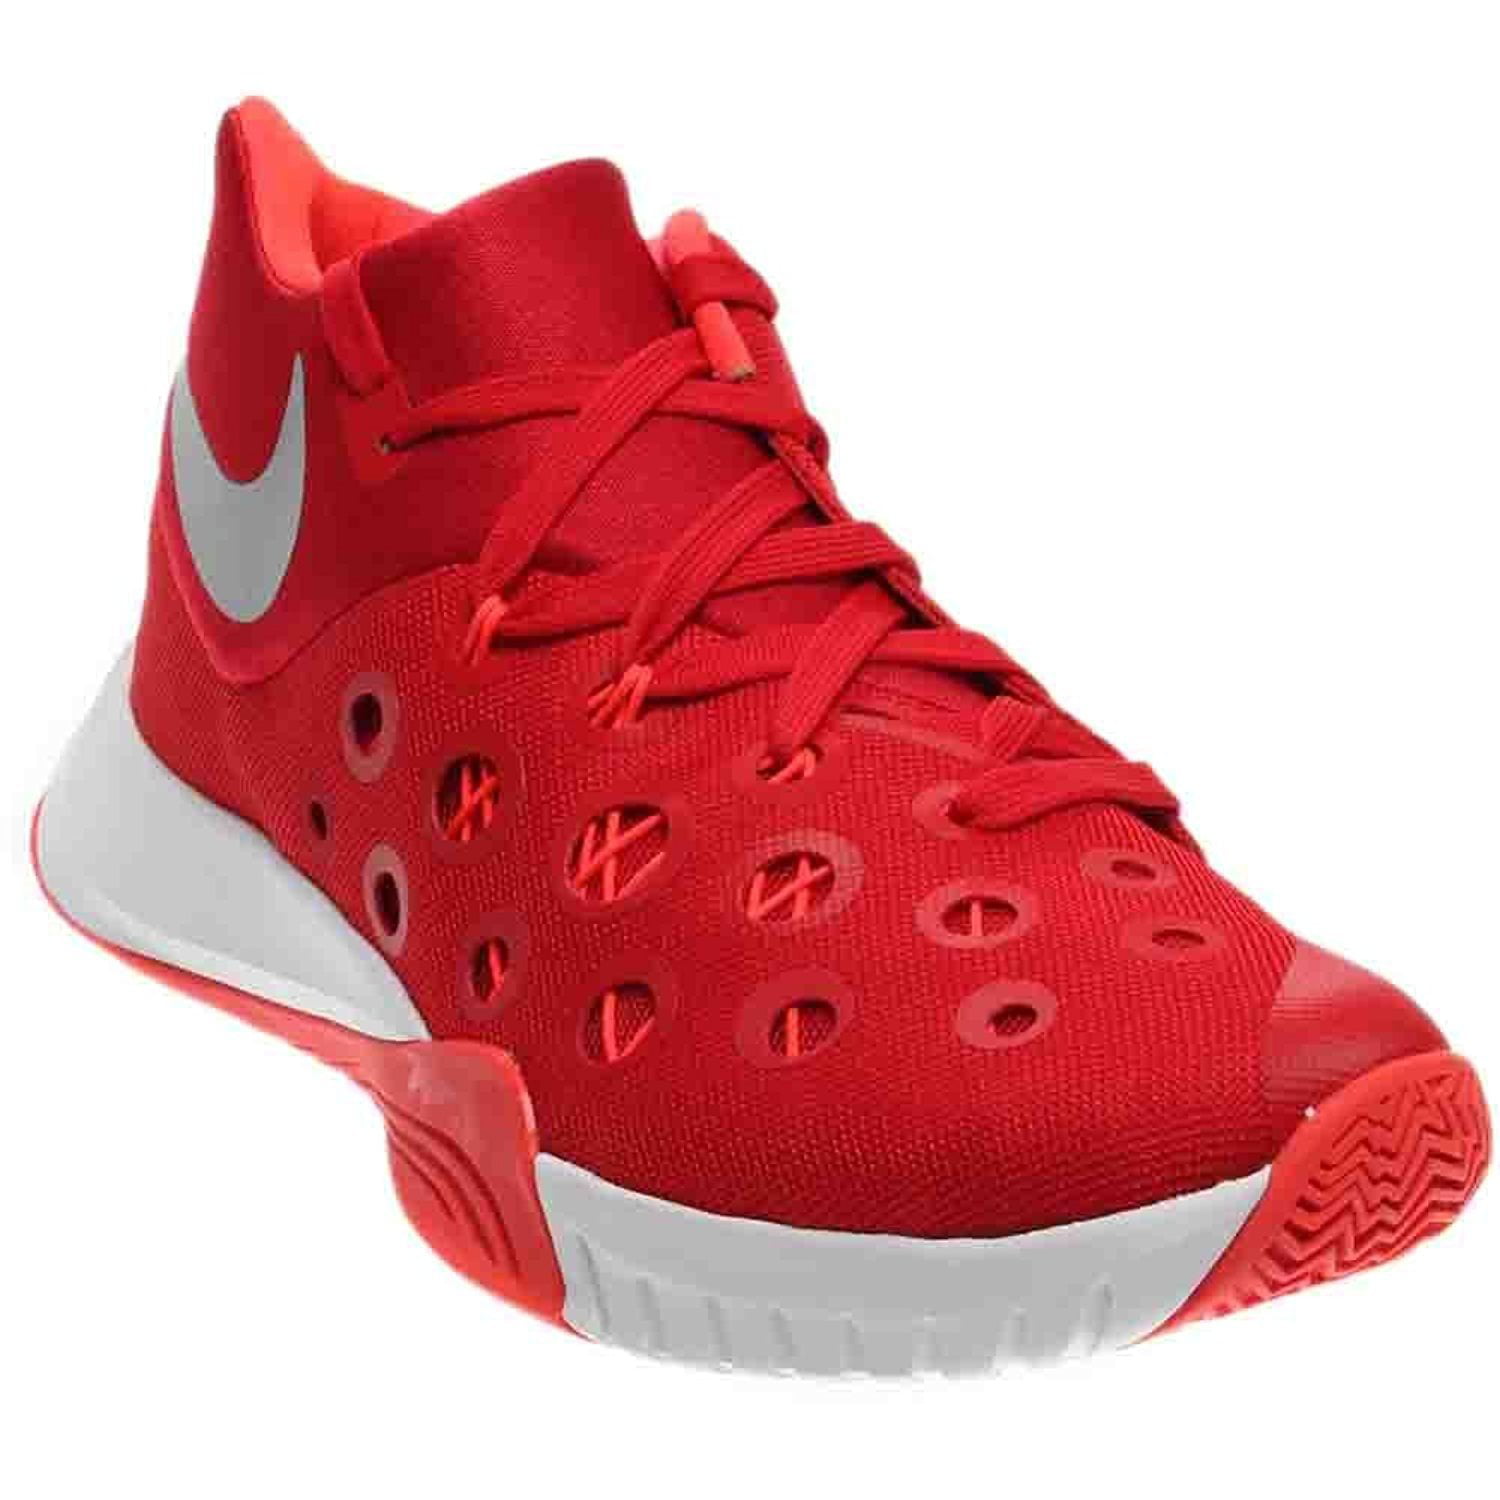 Nike Zoom Hyperquickness 2015 Basketball Shoes Walmart.com